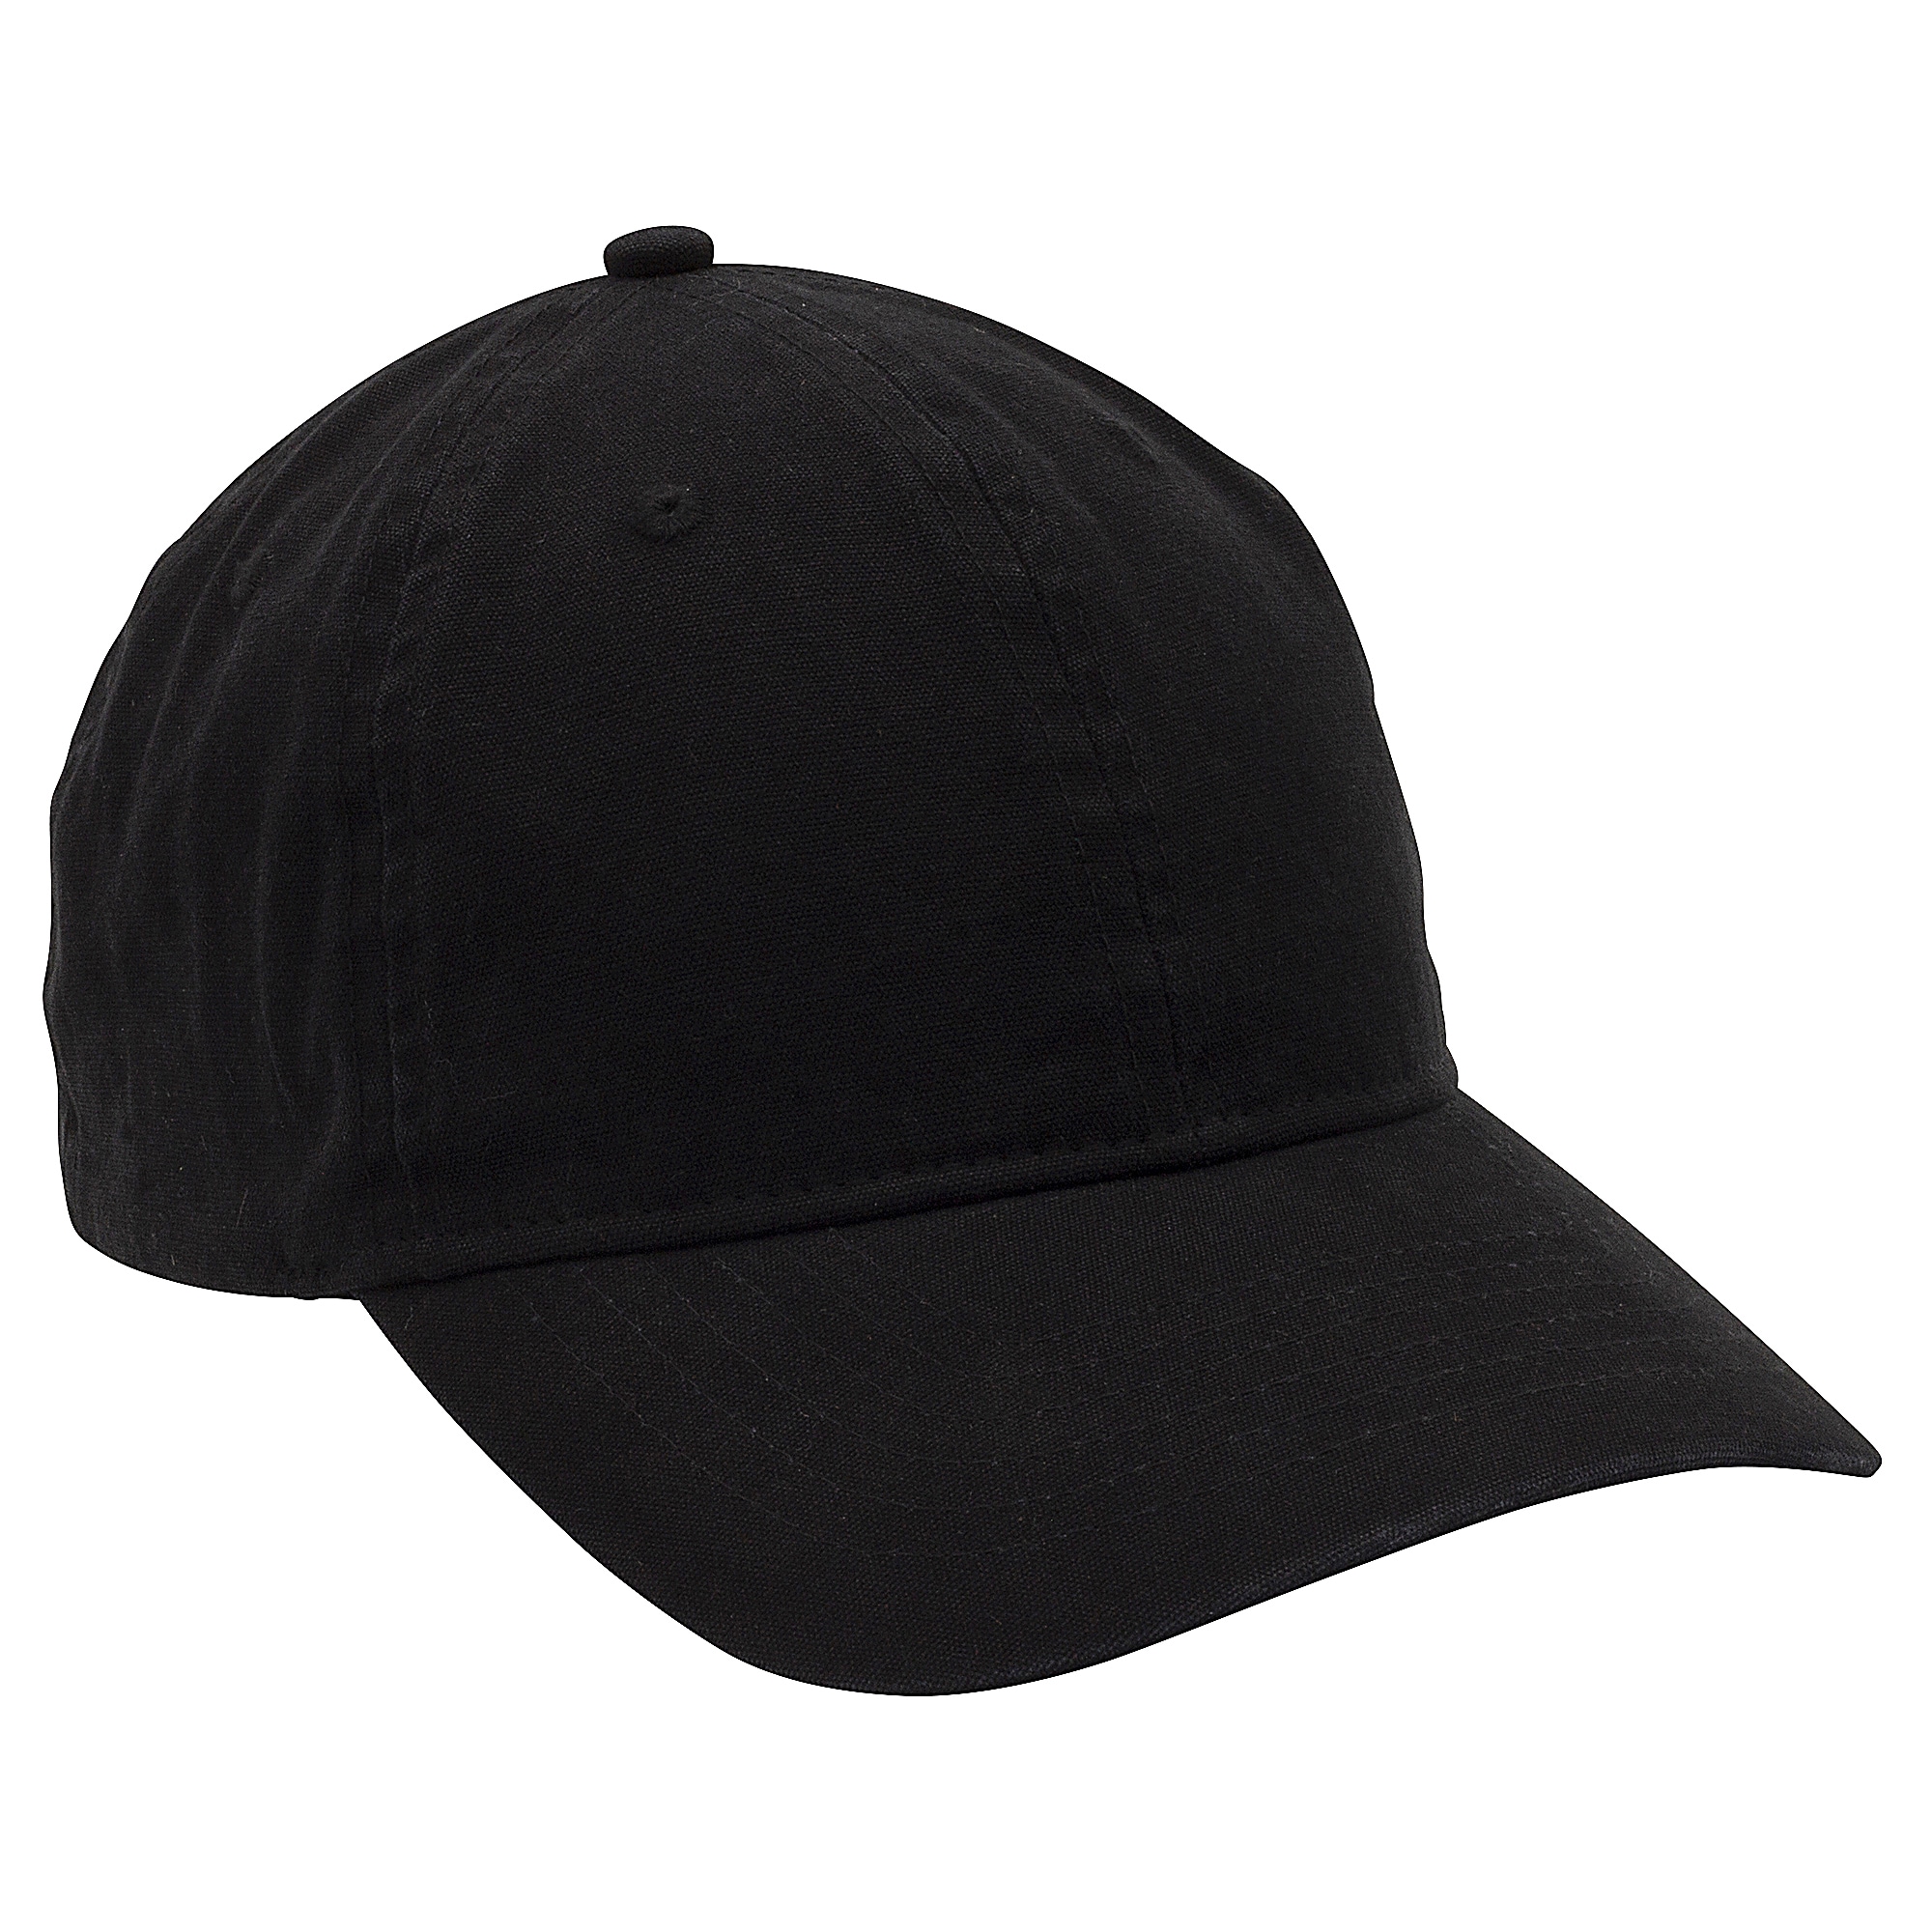 Cotton baseball cap in black. 